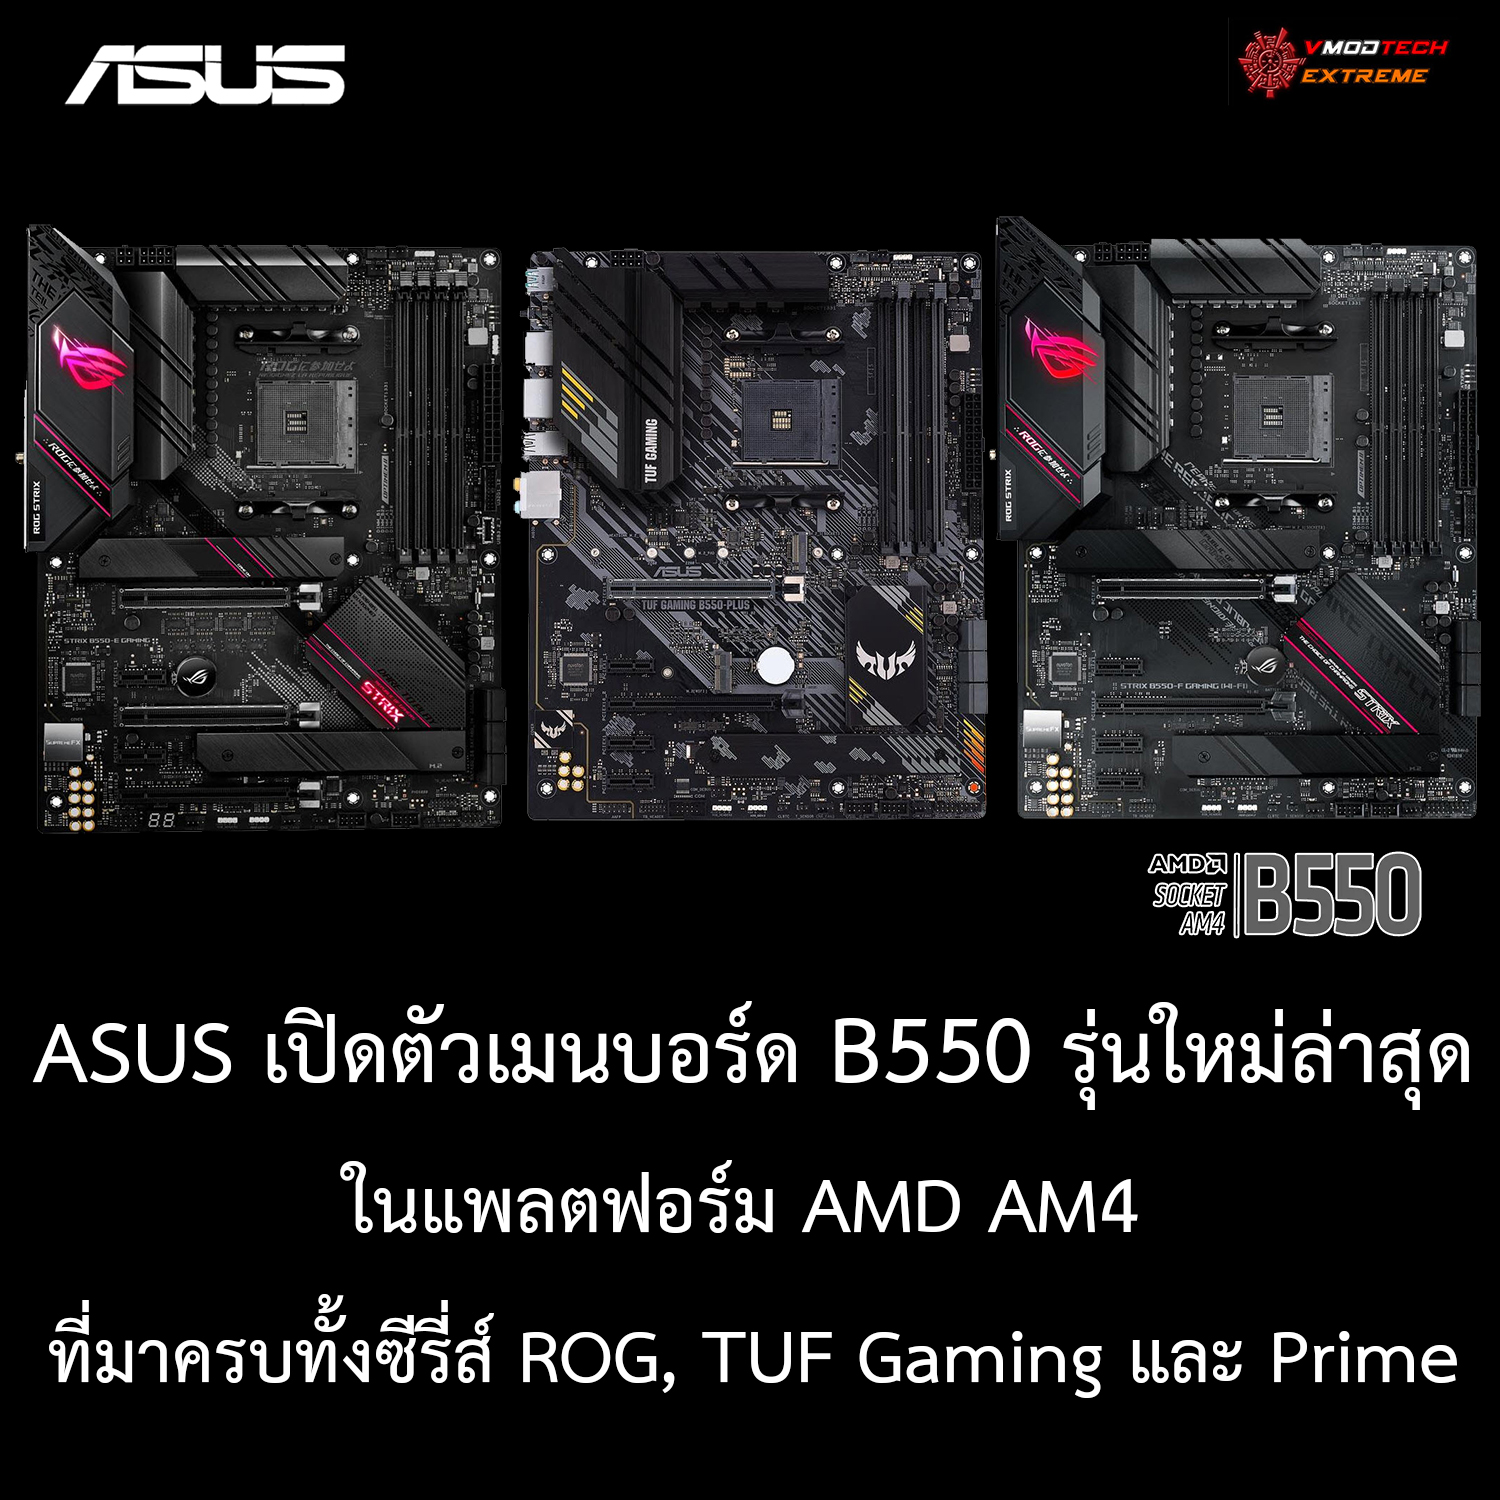 ASUS ประกาศเปิดตัวเมนบอร์ด B550 รุ่นใหม่ล่าสุดในแพลตฟอร์ม AMD AM4 ที่มาครบทั้งซีรี่ส์ ROG, TUF Gaming และ Prime